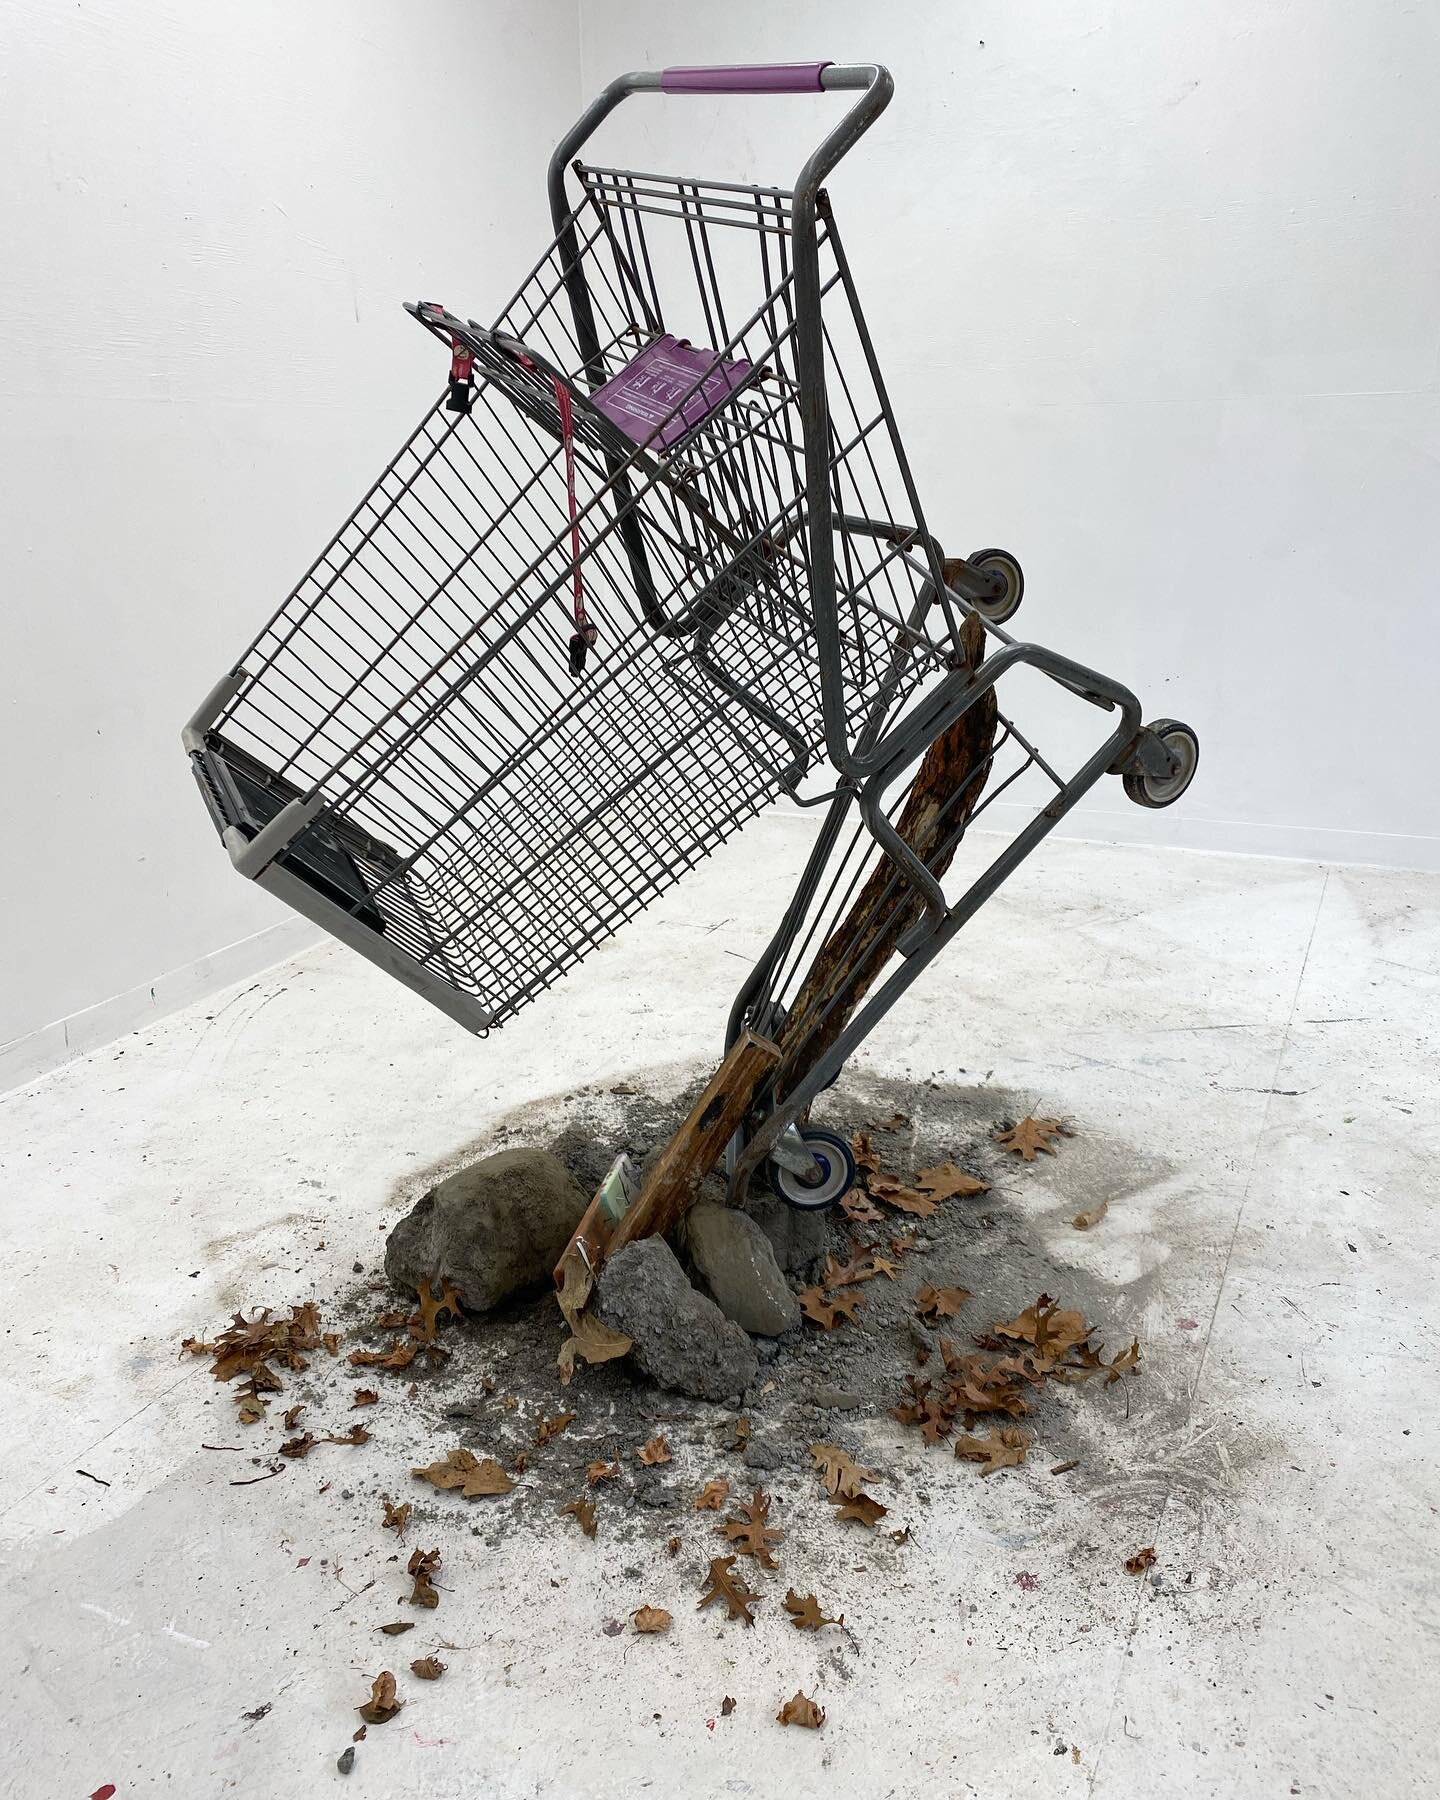 Dried Lament - H64&rdquo;xW36&rdquo;xD49&rdquo; - cement,wood and steel shopping cart 
.
..
&hellip;
#jamesgreco #sculpture #contemporaryart #contemporarysculpture #poetry #haiku #drawinginspace #fluxus #nyc #la